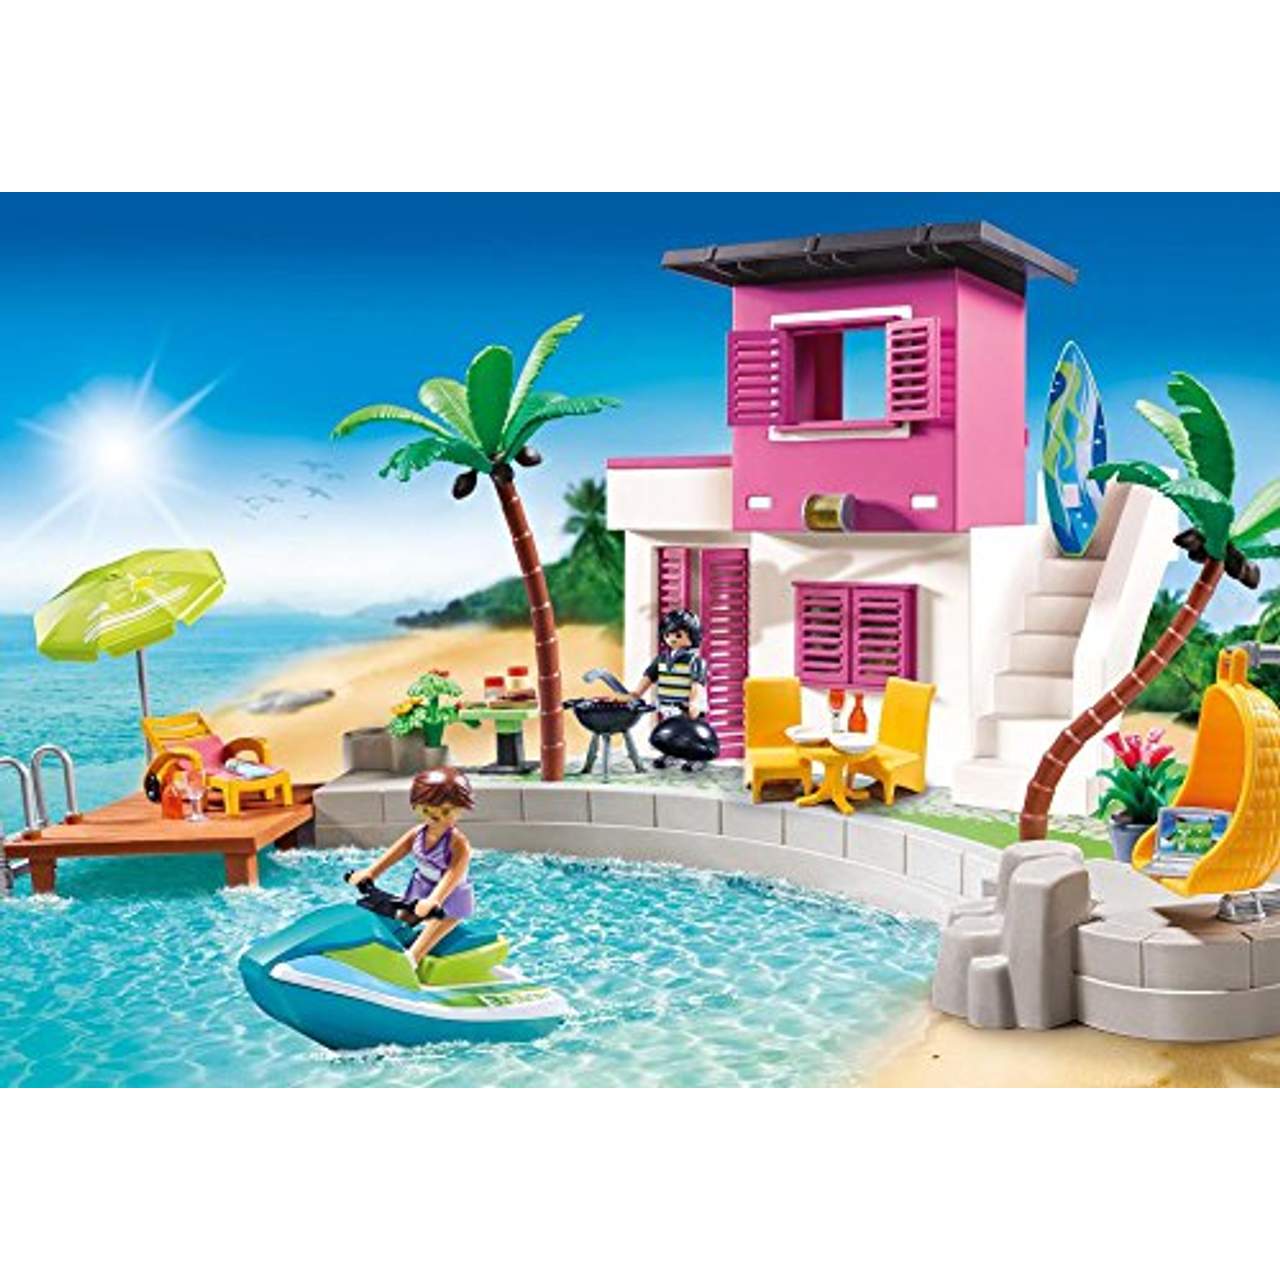 PLAYMOBIL Luxury Beach House Playset